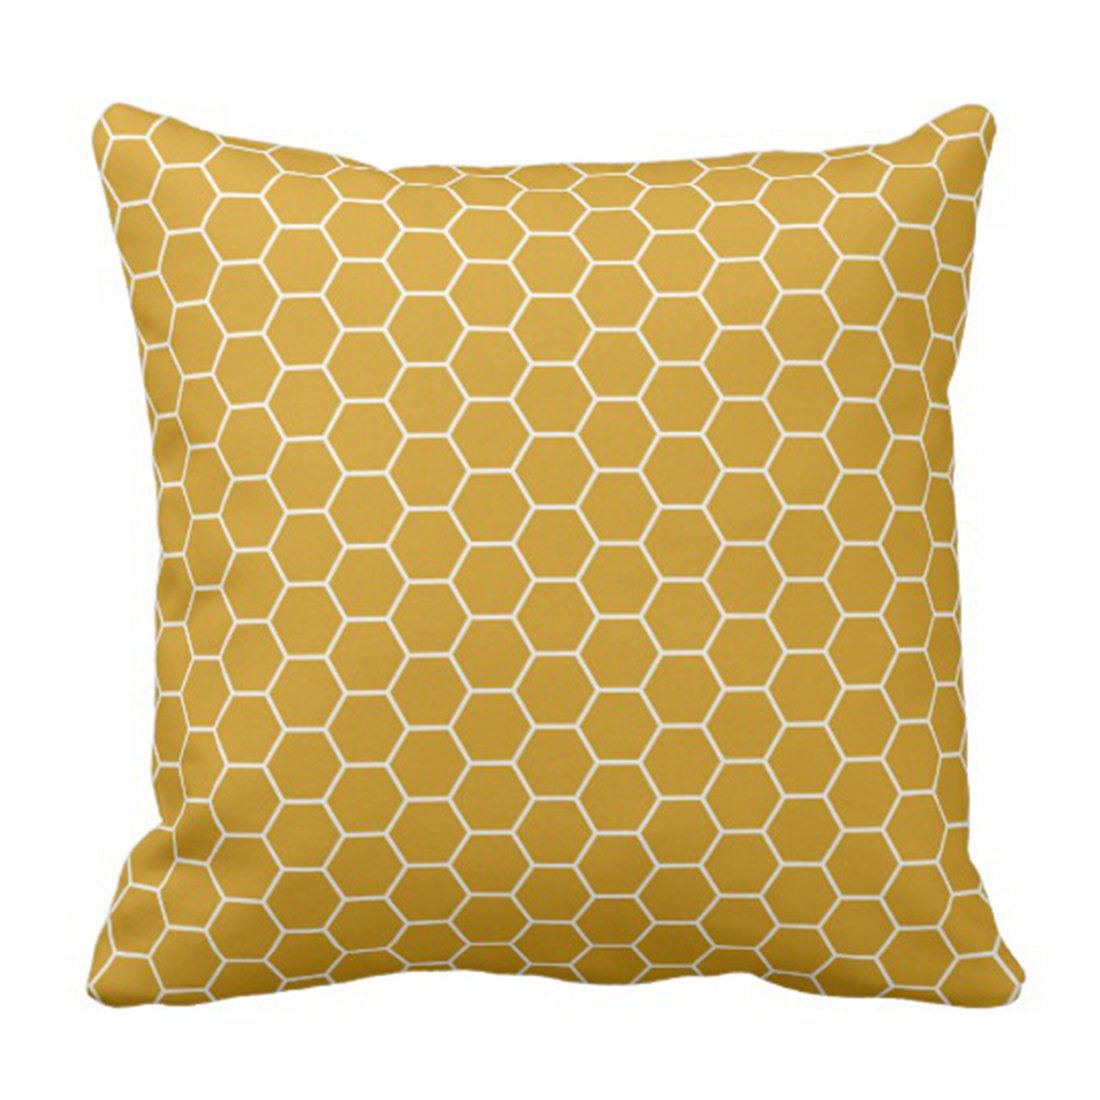 Mustard yellow cushion